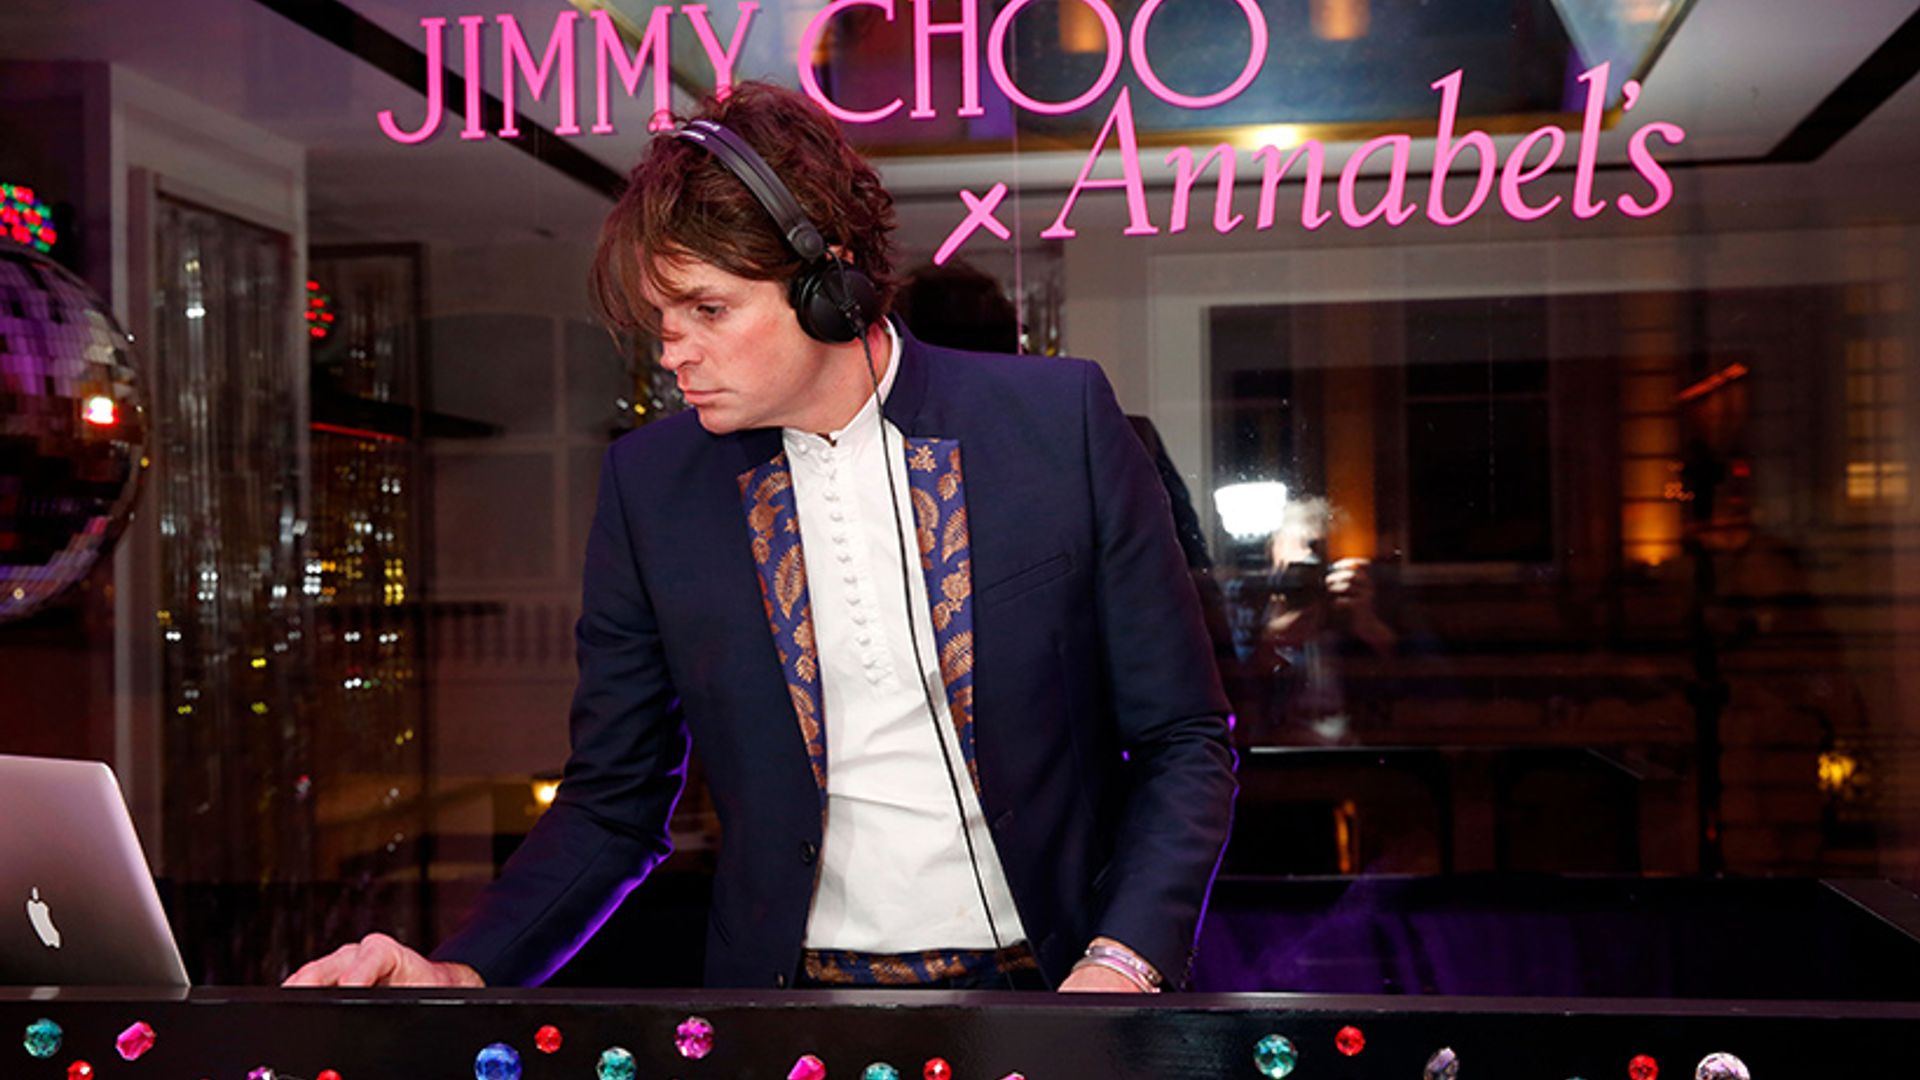 Stylishly Choo - fashionistas attend Jimmy Choo x Annabel's party